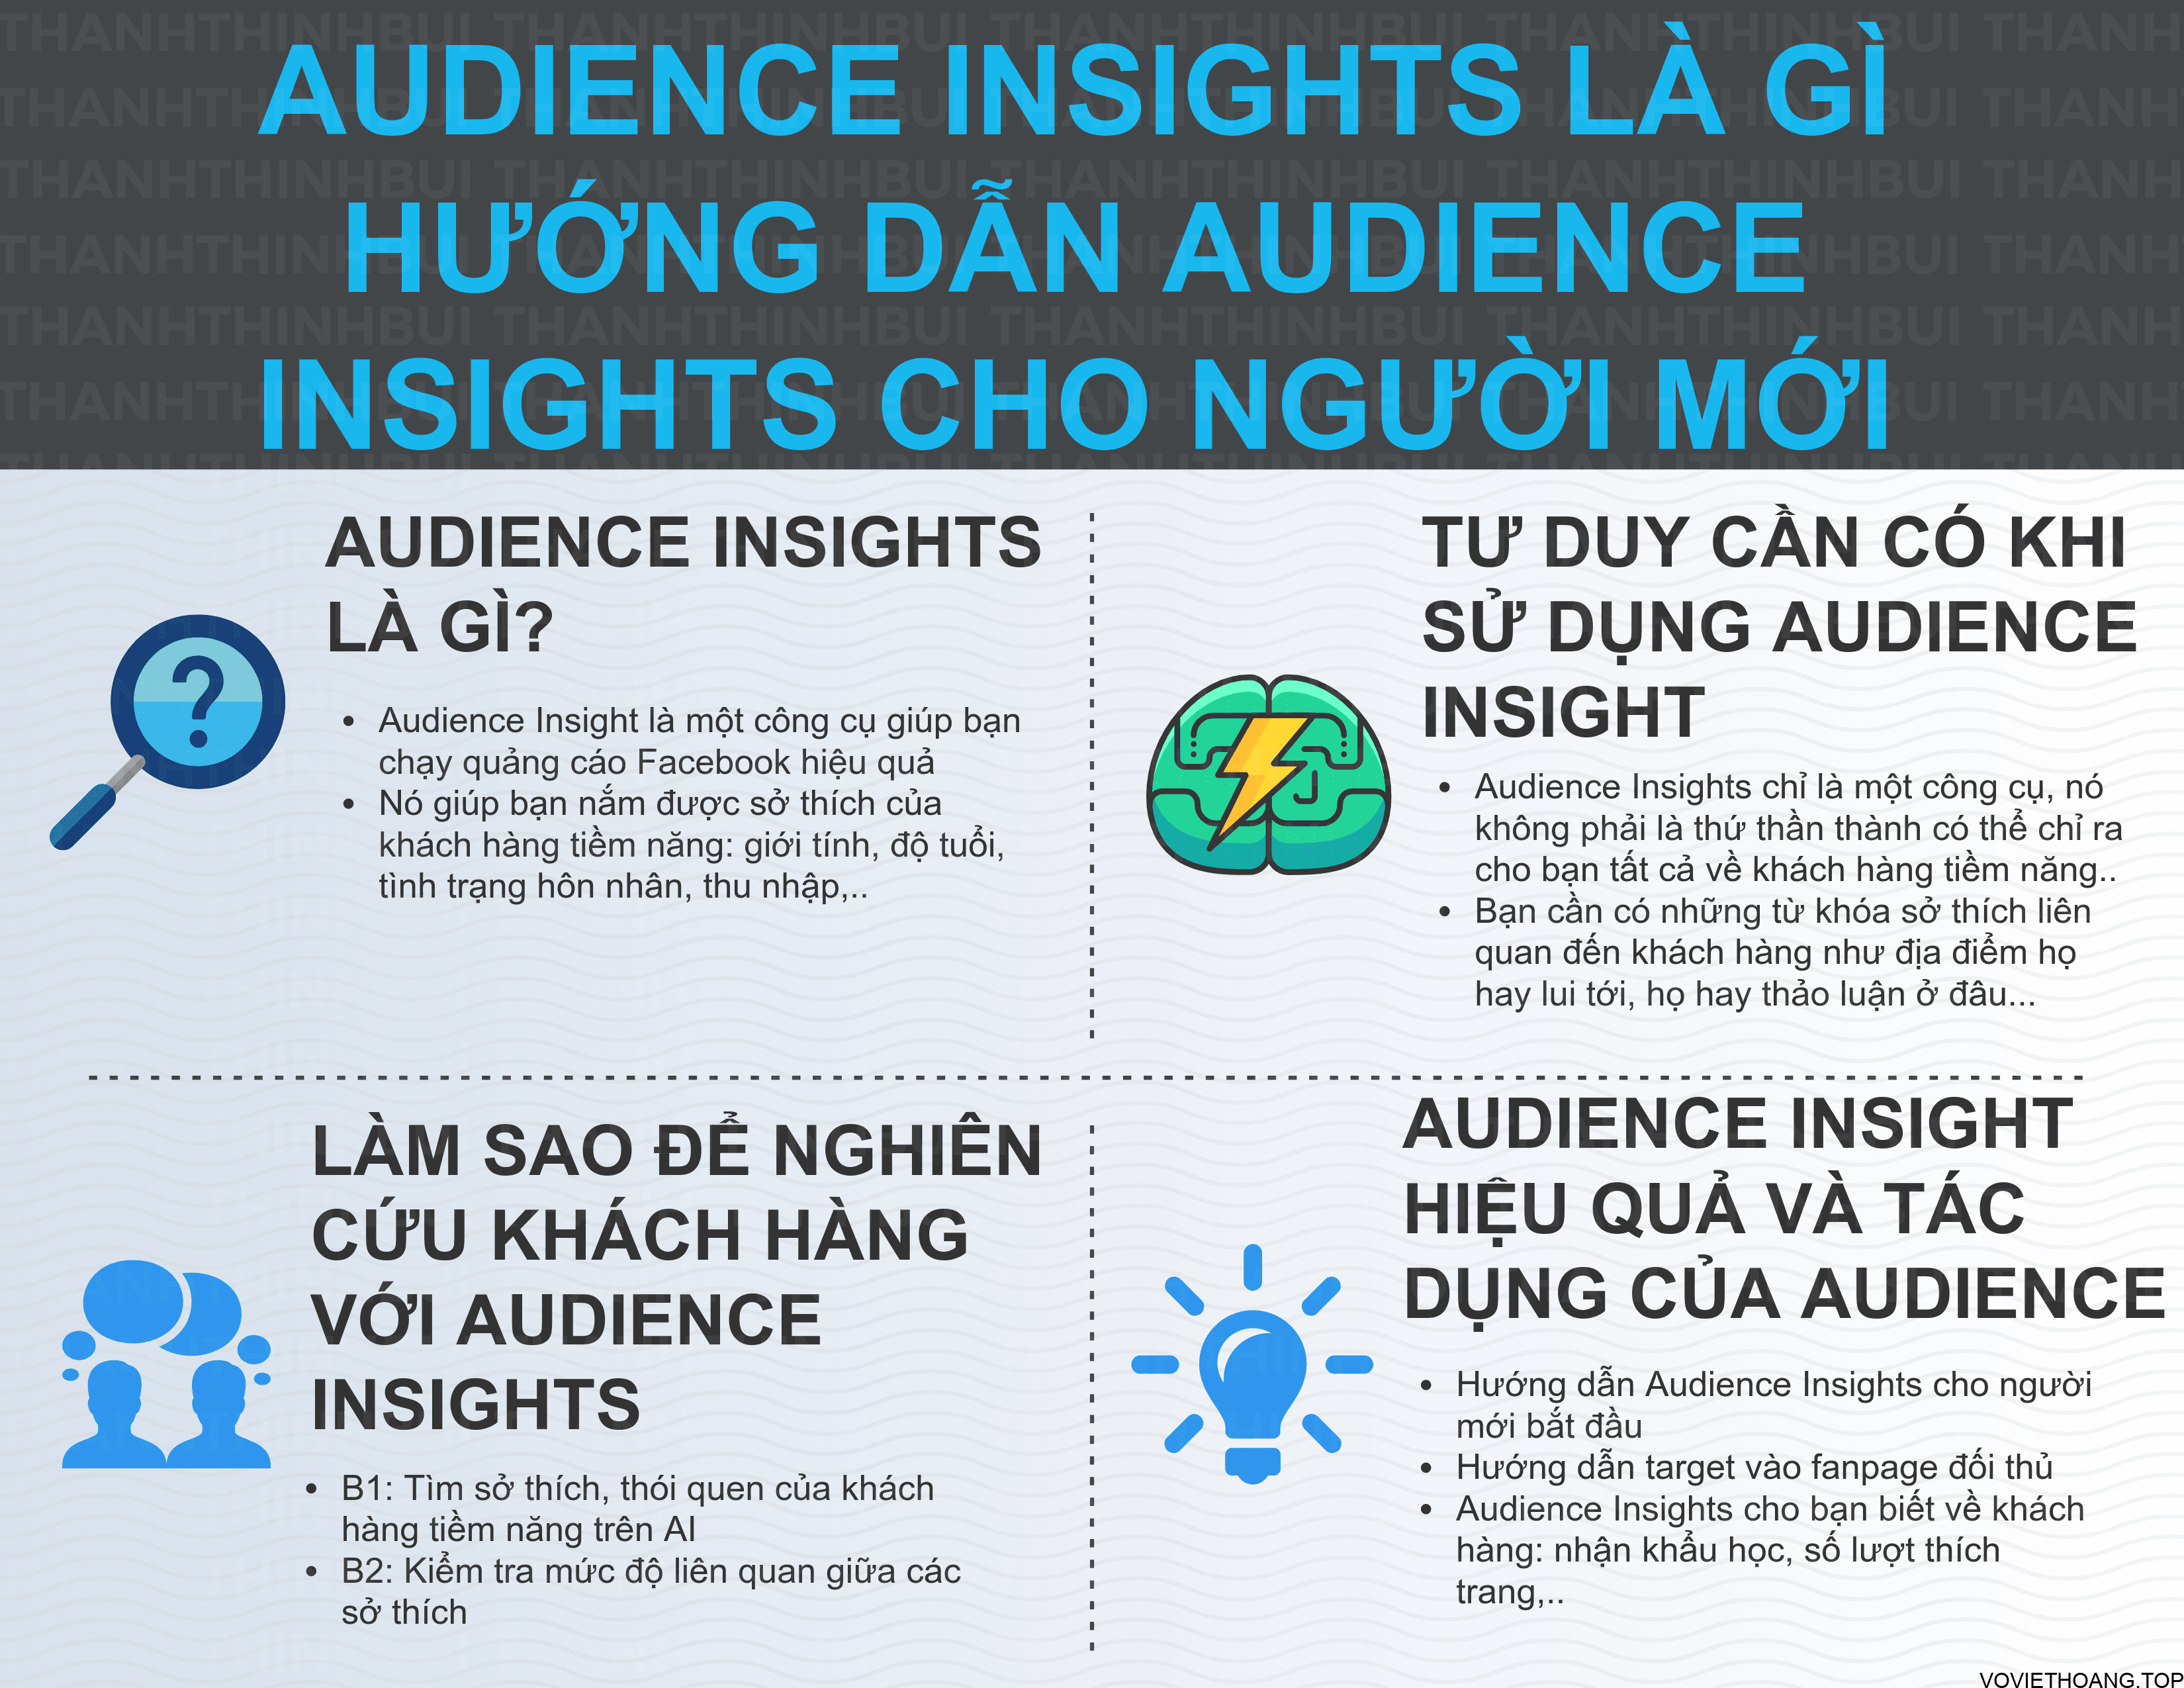 Audience Insights Facebook là gì?